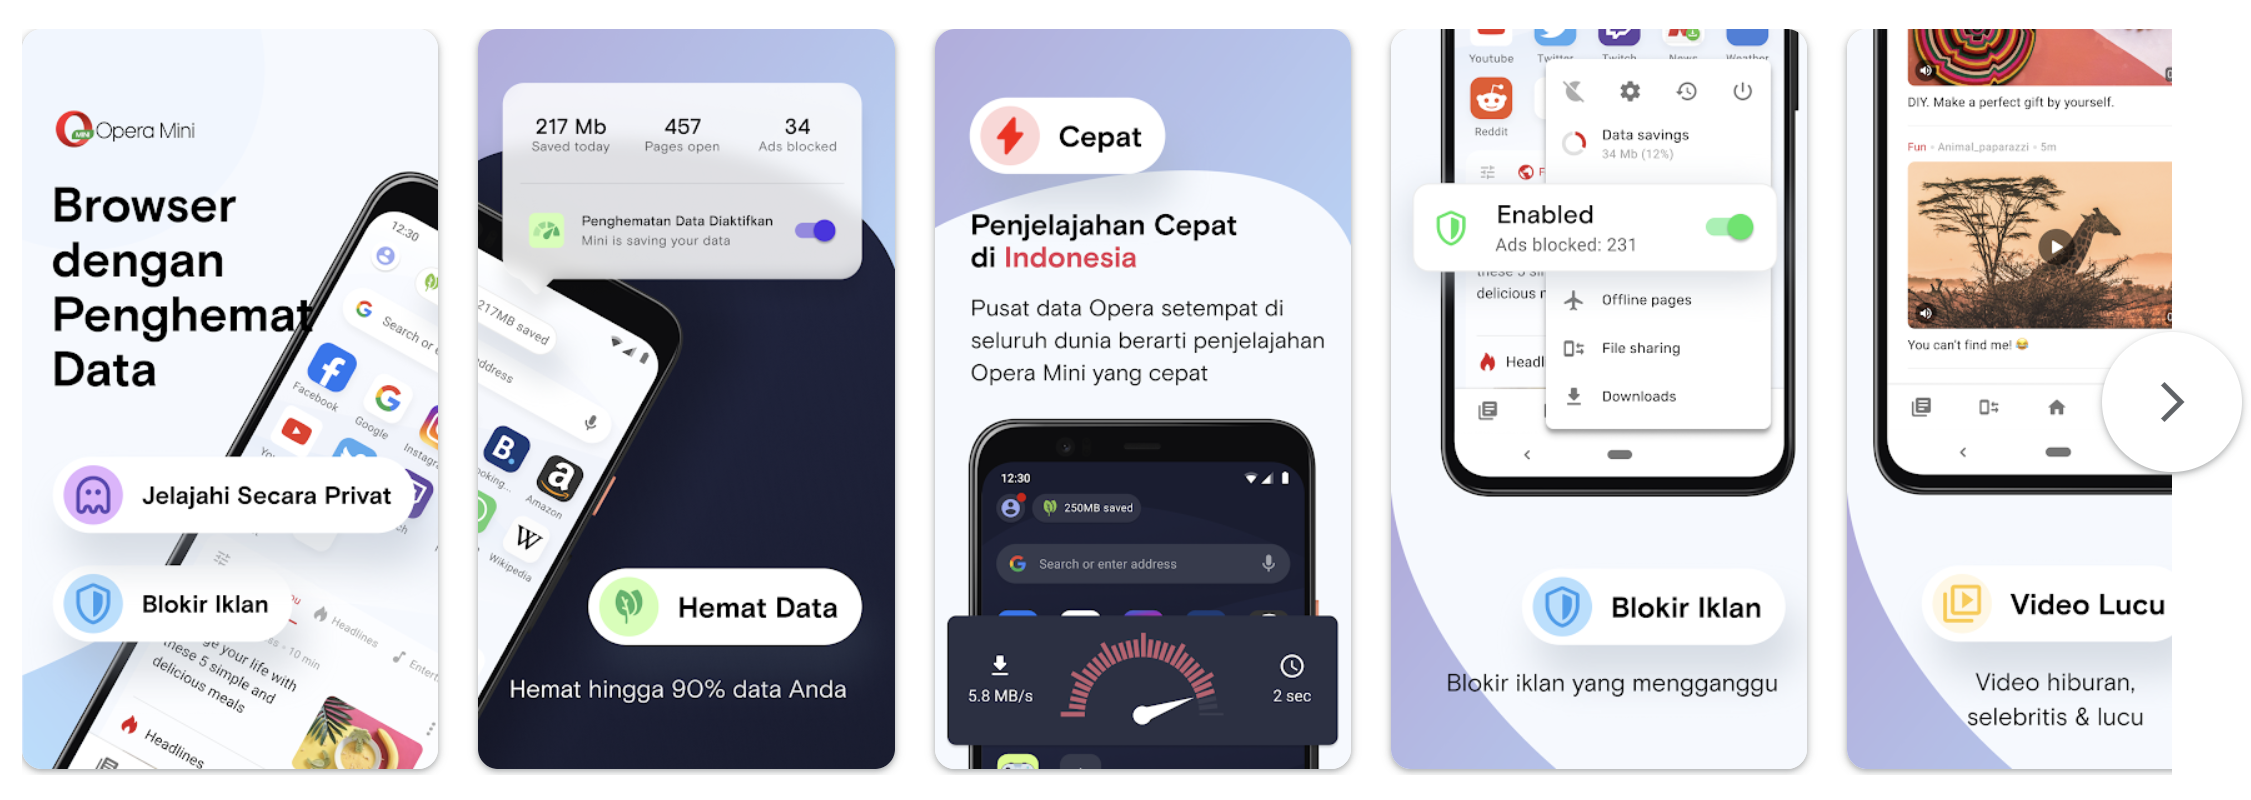 Aplikasi untuk membuka URL di Android - Opera Mini